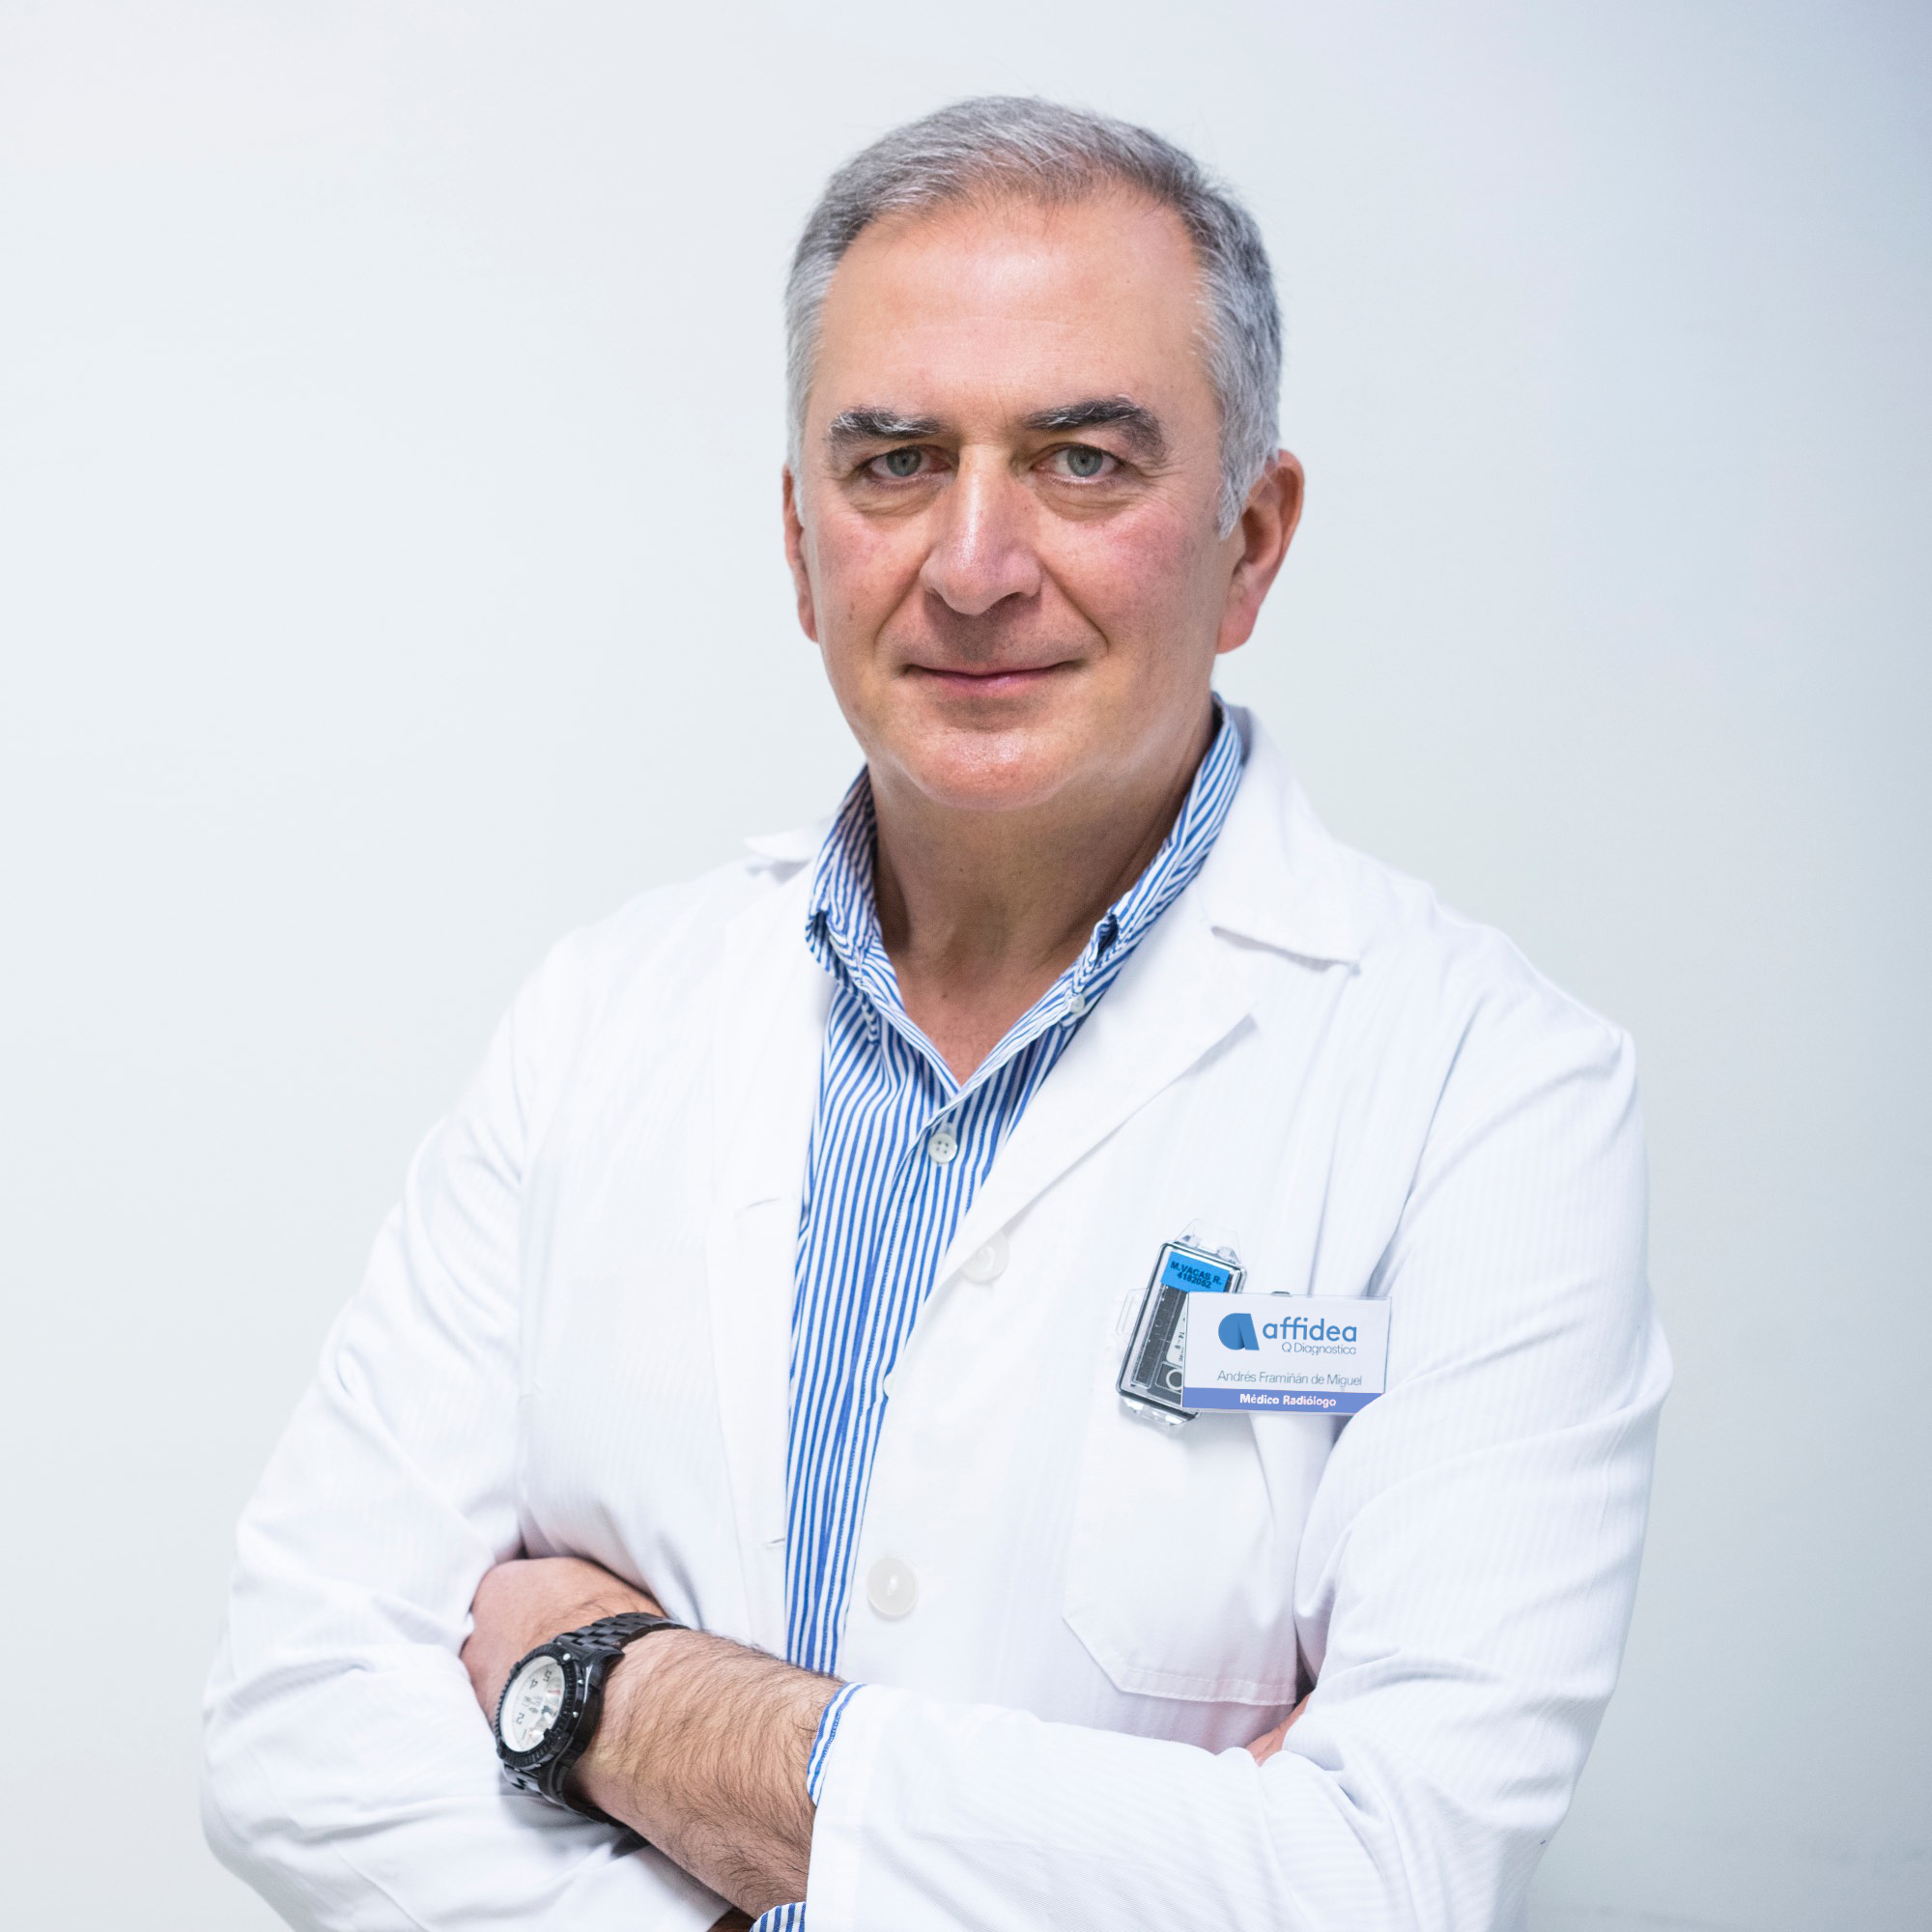 Meet Dr. Andrés Framiñan